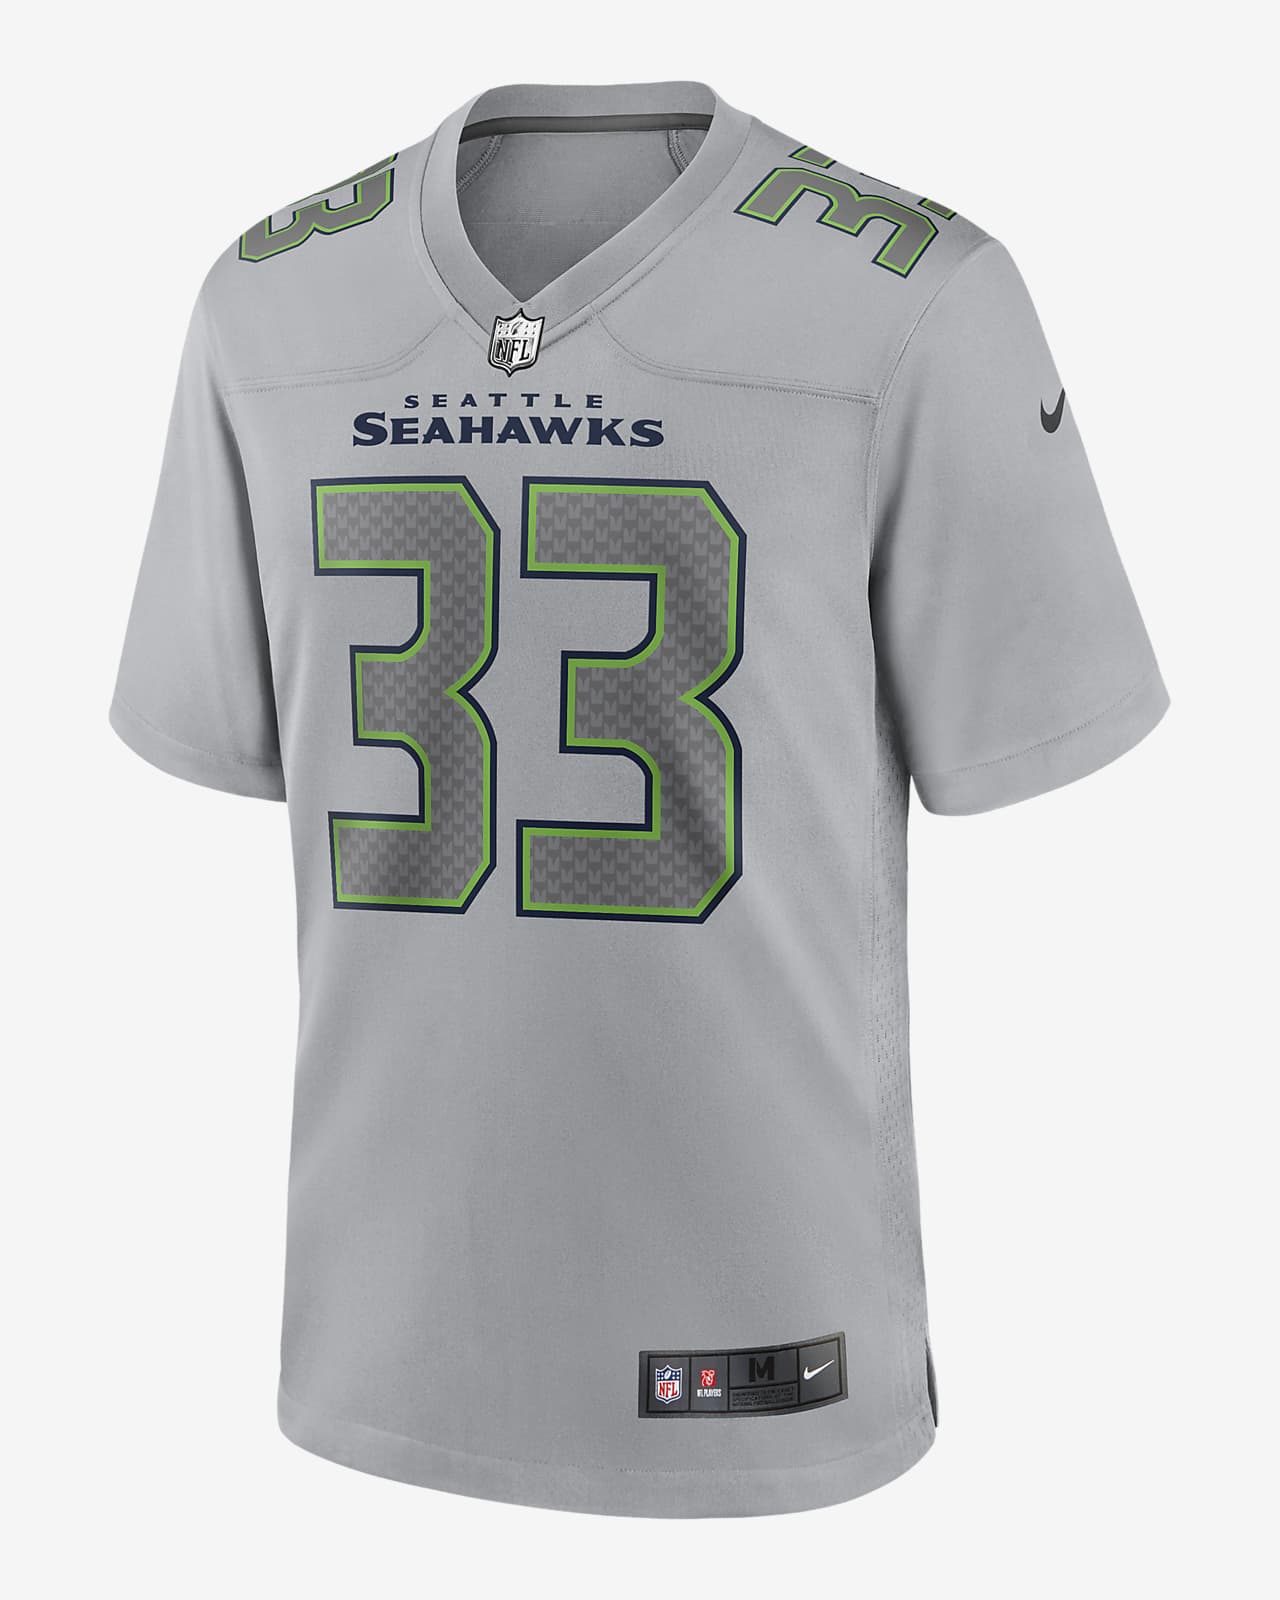 Jersey de fútbol americano Fashion hombre NFL Seahawks Atmosphere (Jamal Adams). Nike.com